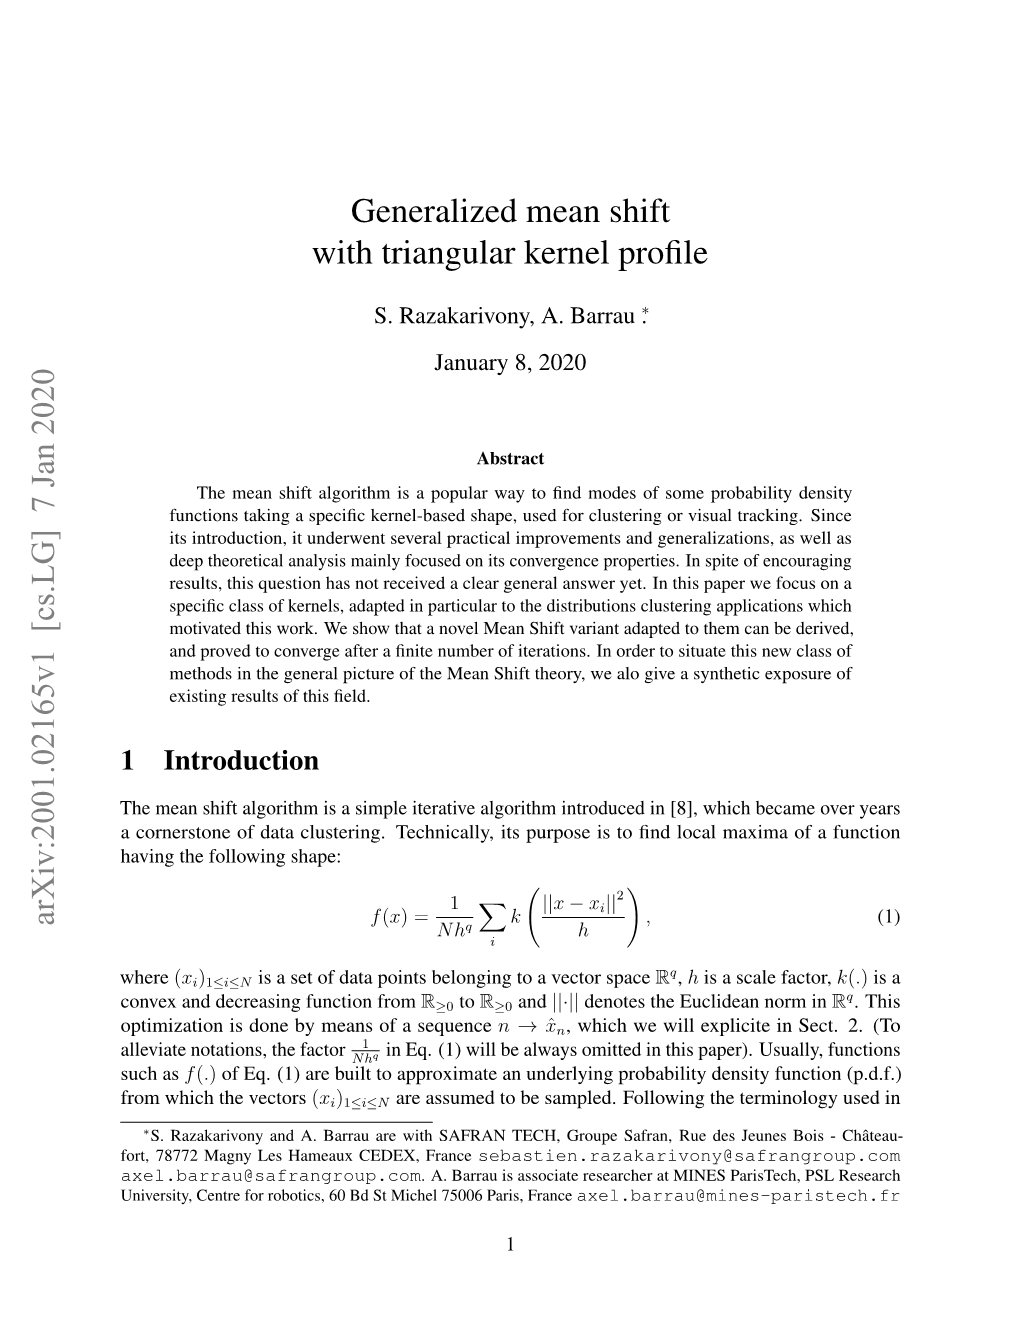 Generalized Mean Shift with Triangular Kernel Profile Arxiv:2001.02165V1 [Cs.LG] 7 Jan 2020